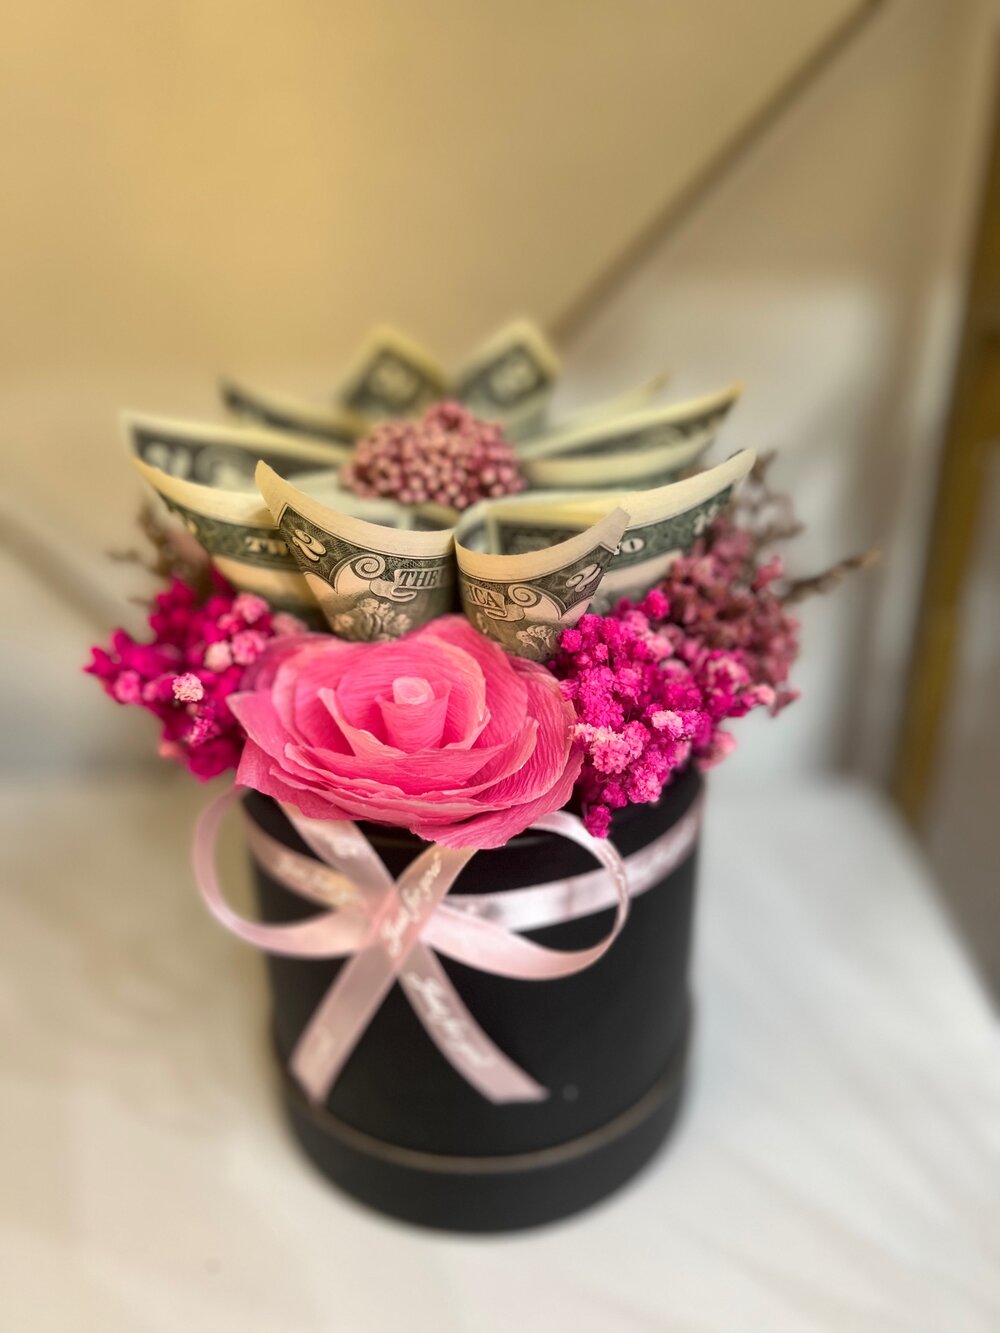 Real Money + Giant Rose Bouquet by KK House — KK HOUSE